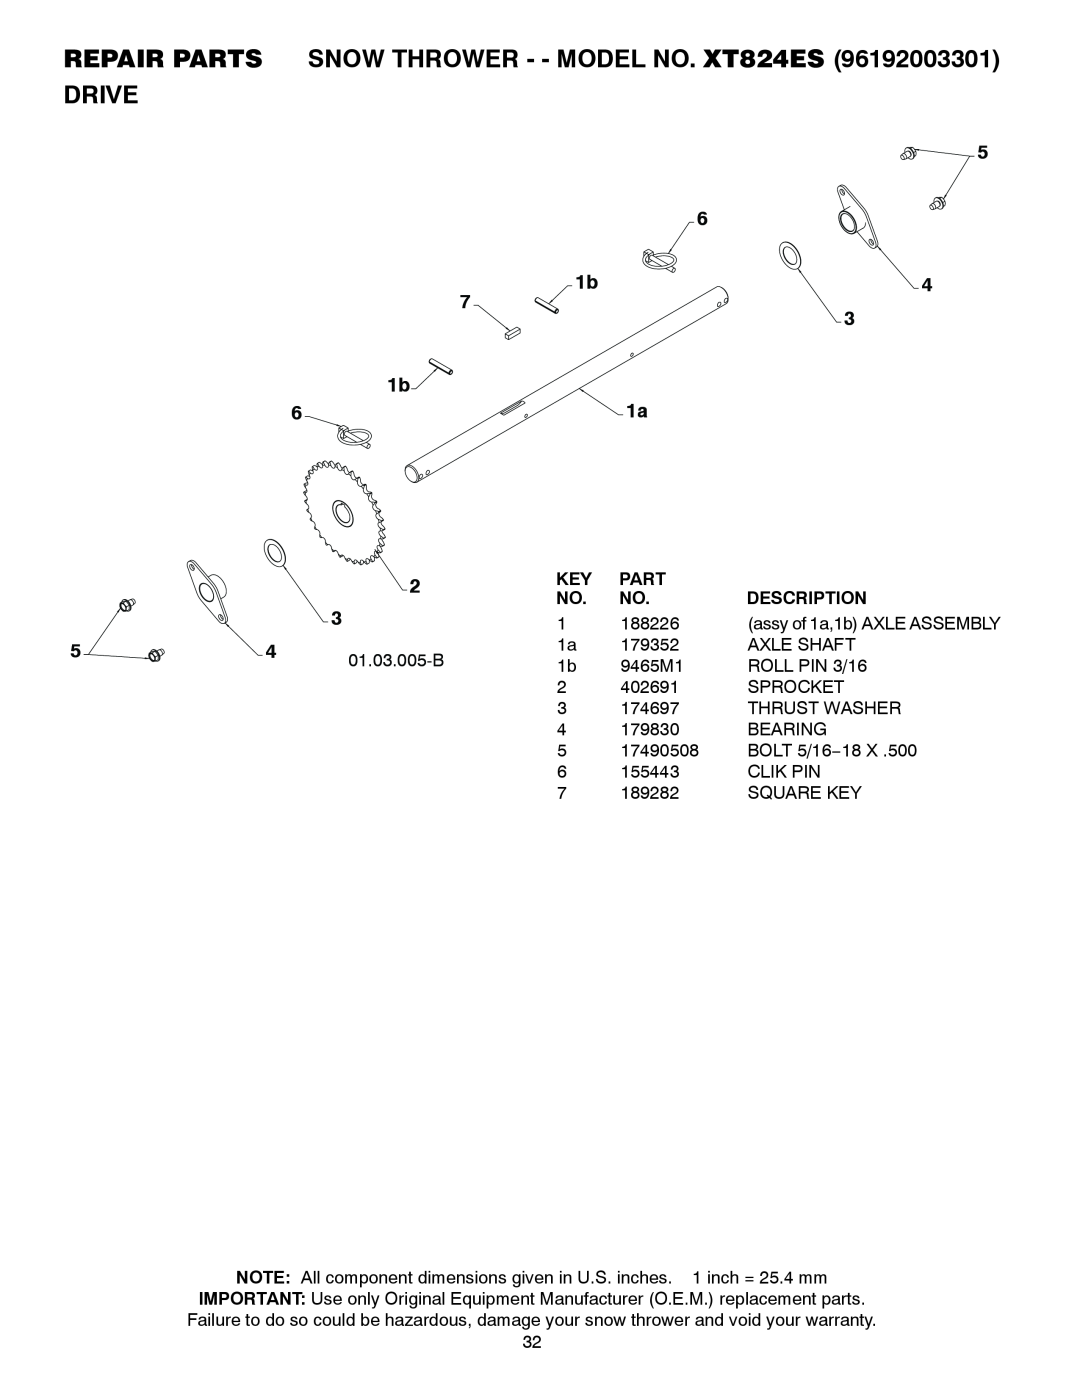 Poulan 430352 REPAIR PARTS SNOW THROWER - - MODEL NO. XT824ES DRIVE, Part, Description, assy of 1a,1b AXLE ASSEMBLY 